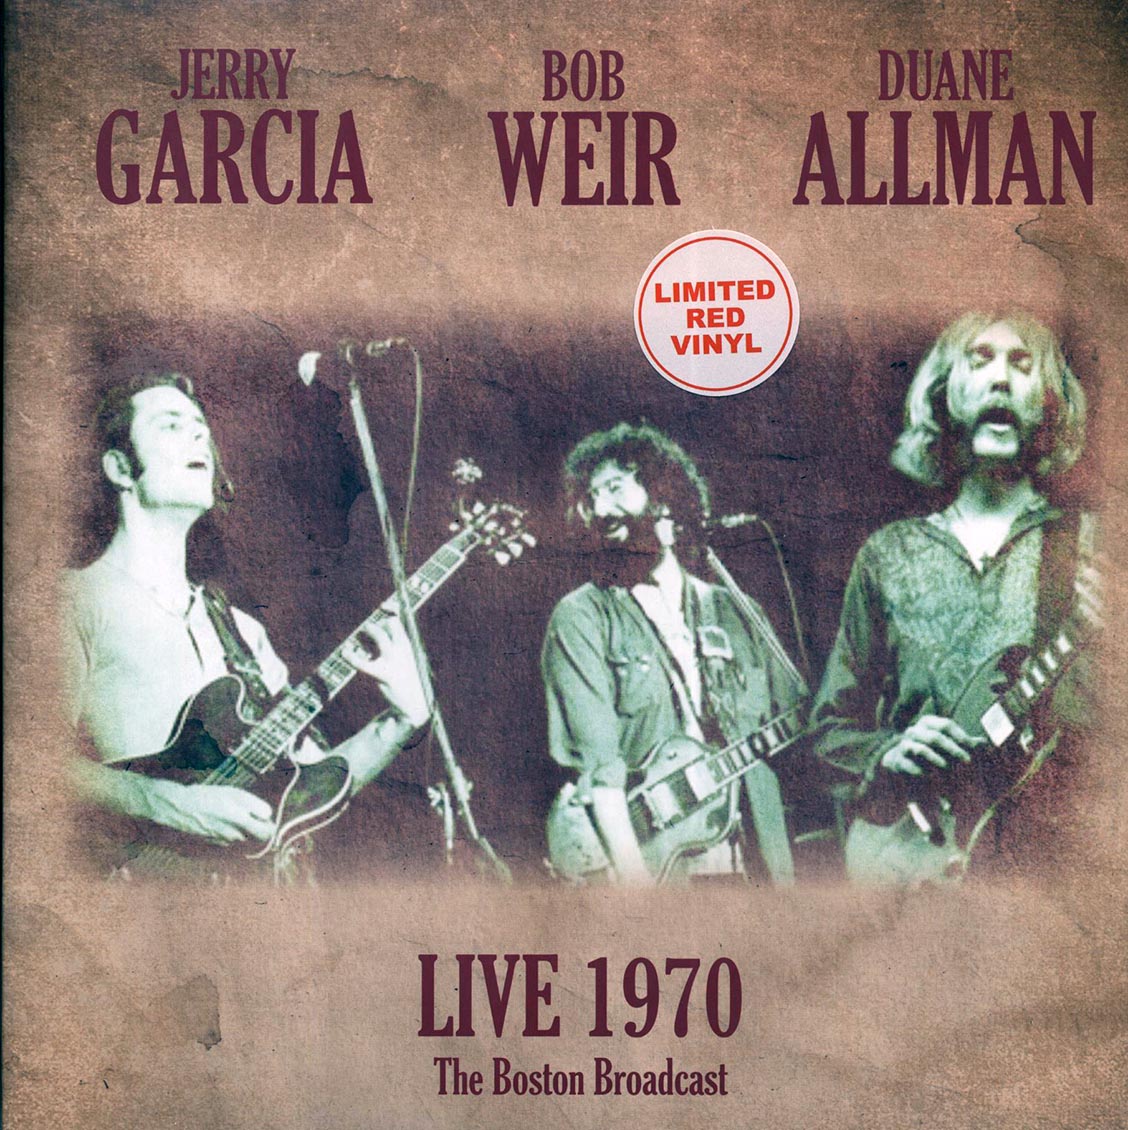 Jerry Garcia, Bob Weir, Duane Allman - Live 1970: The Boston Broadcast, Live Radio Session WBCN Studios, Boston, MA, 21st November 1970 (ltd. ed.) (red vinyl) - Vinyl LP